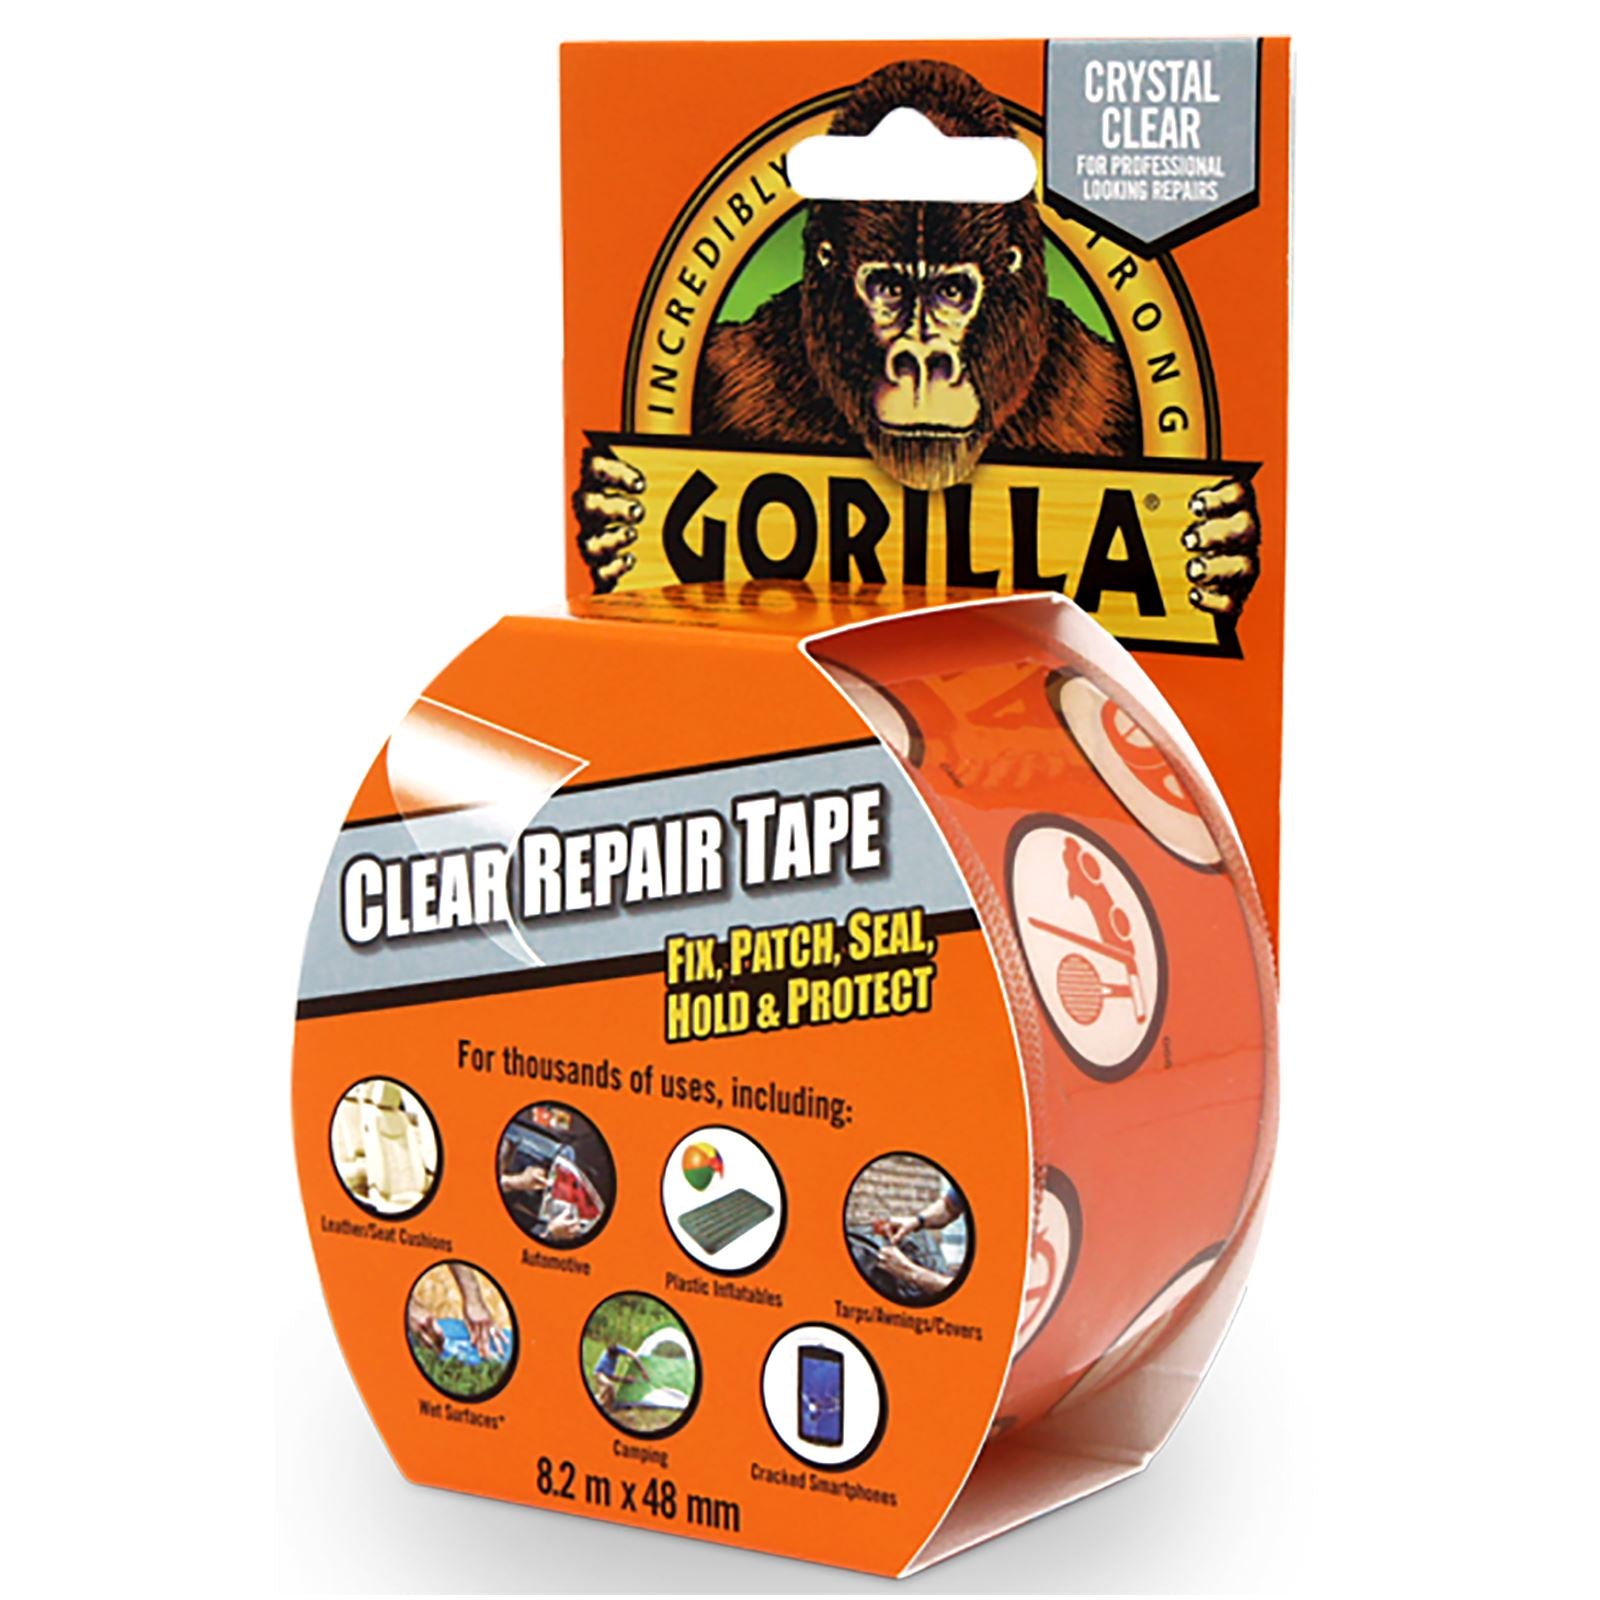 Gorilla 48mm x 8.2m Crystal Clear Repair Tape